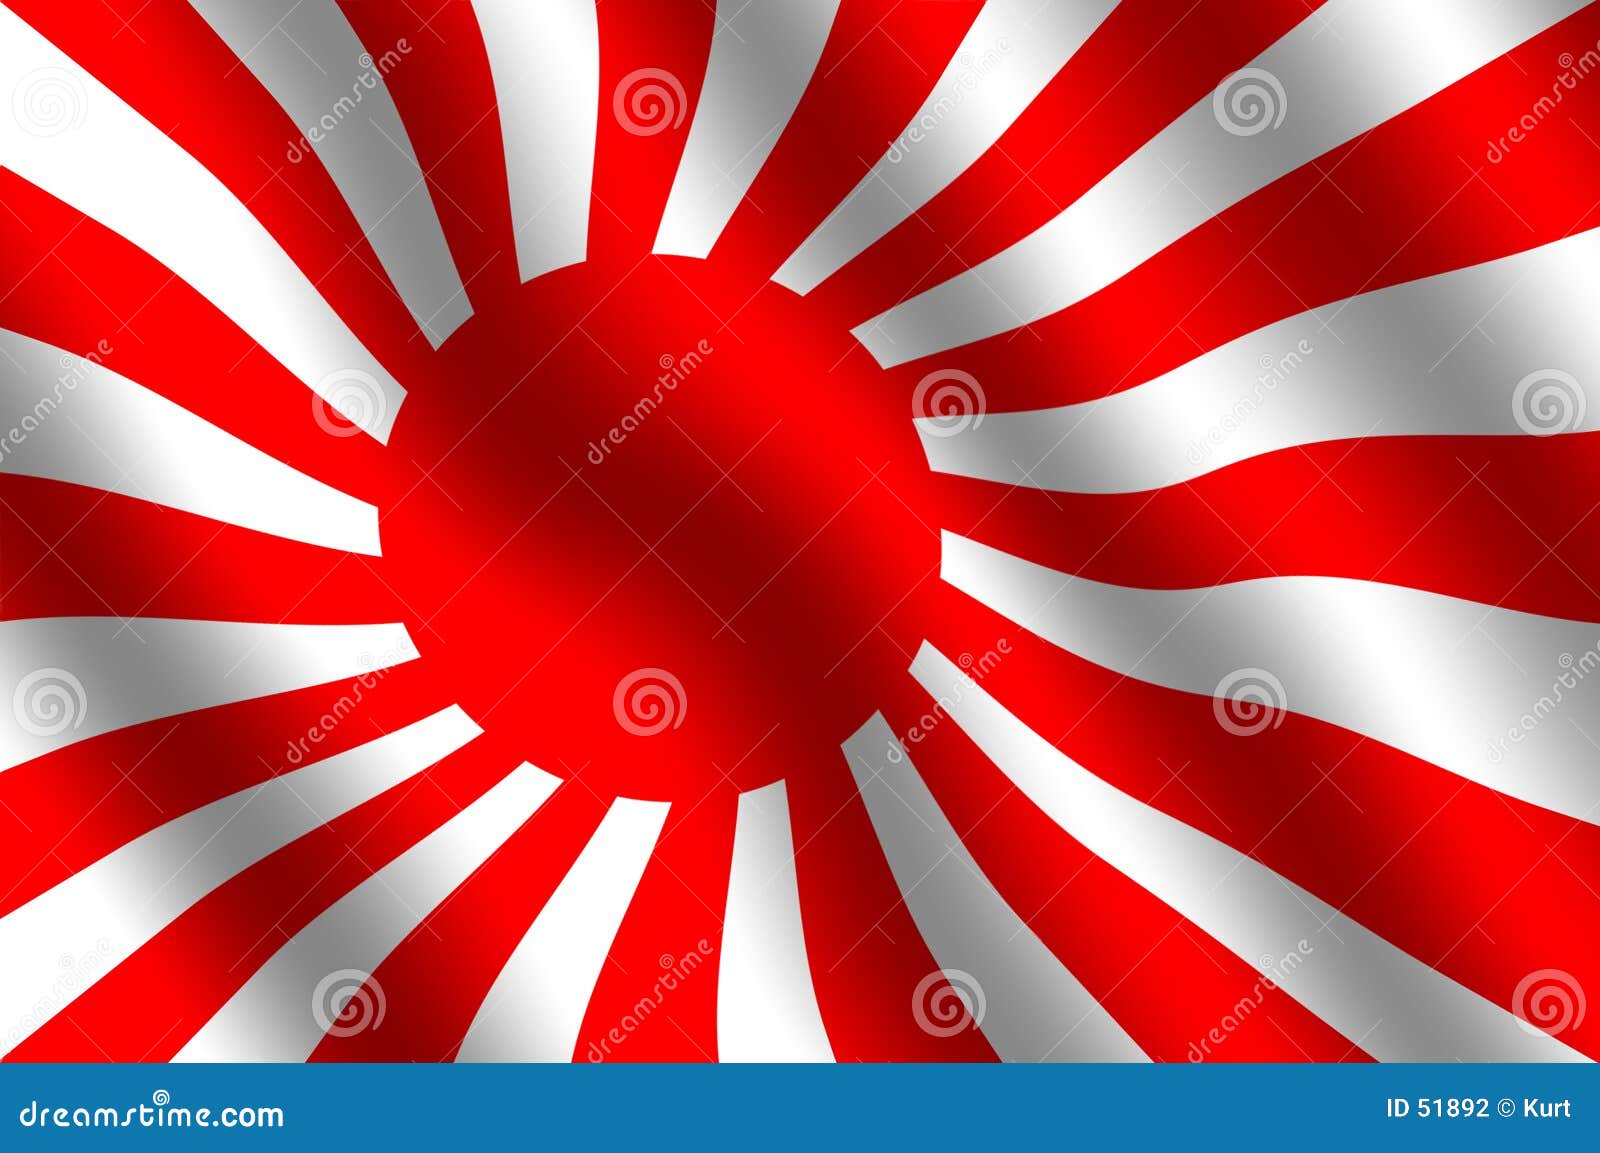 Japanese War Flag Stock Photography Image 51892